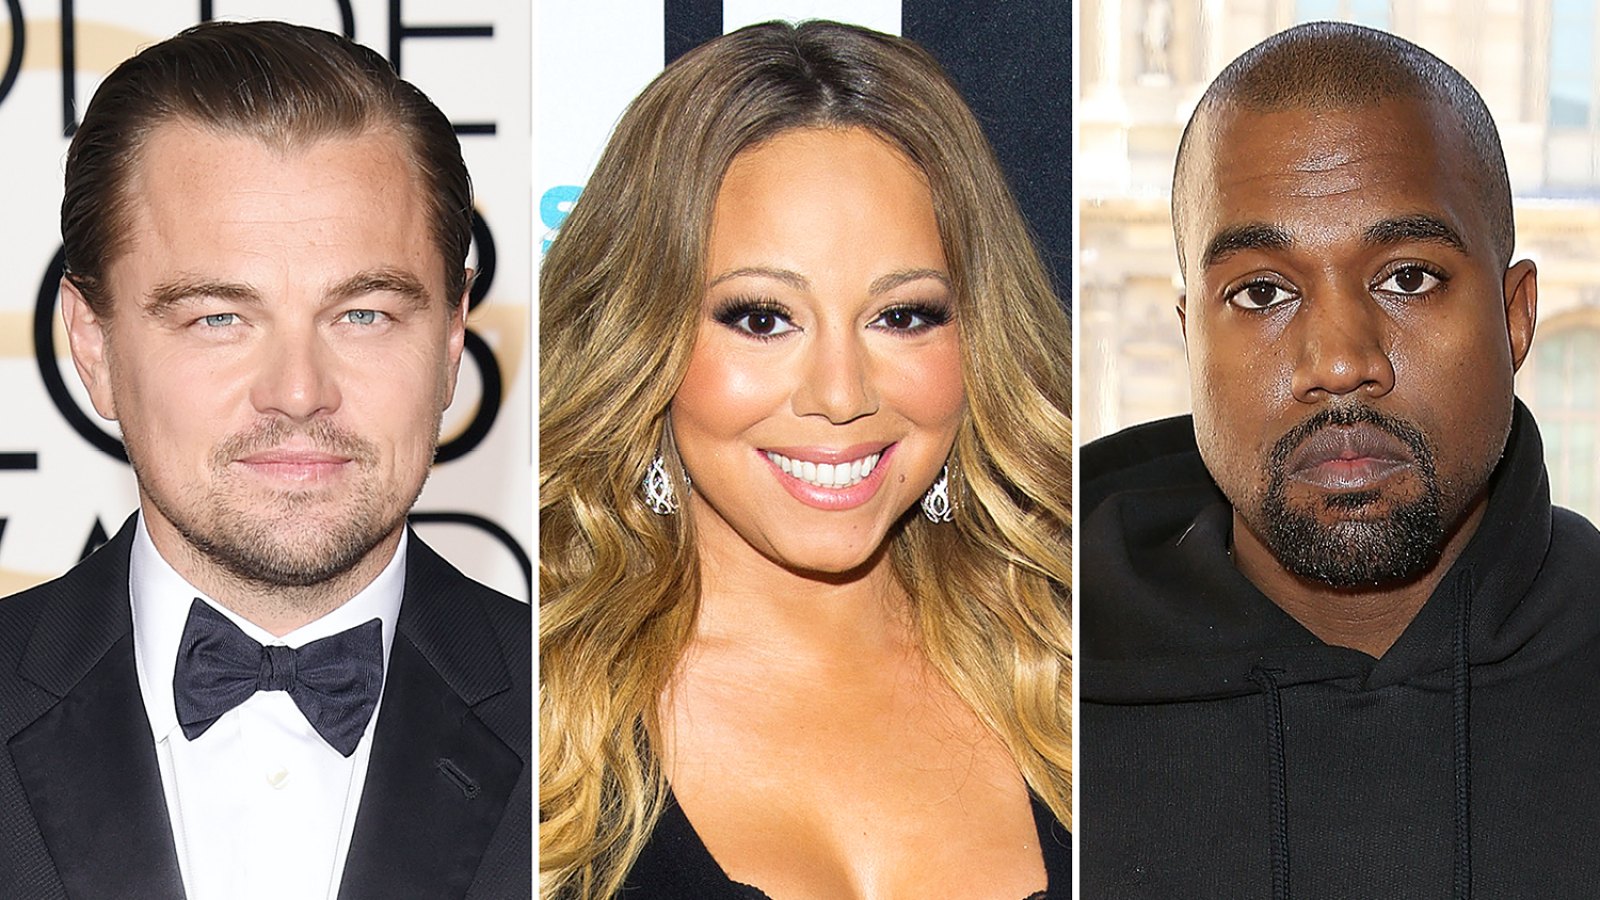 Leonardo DiCaprio, Mariah Carey and Kanye West